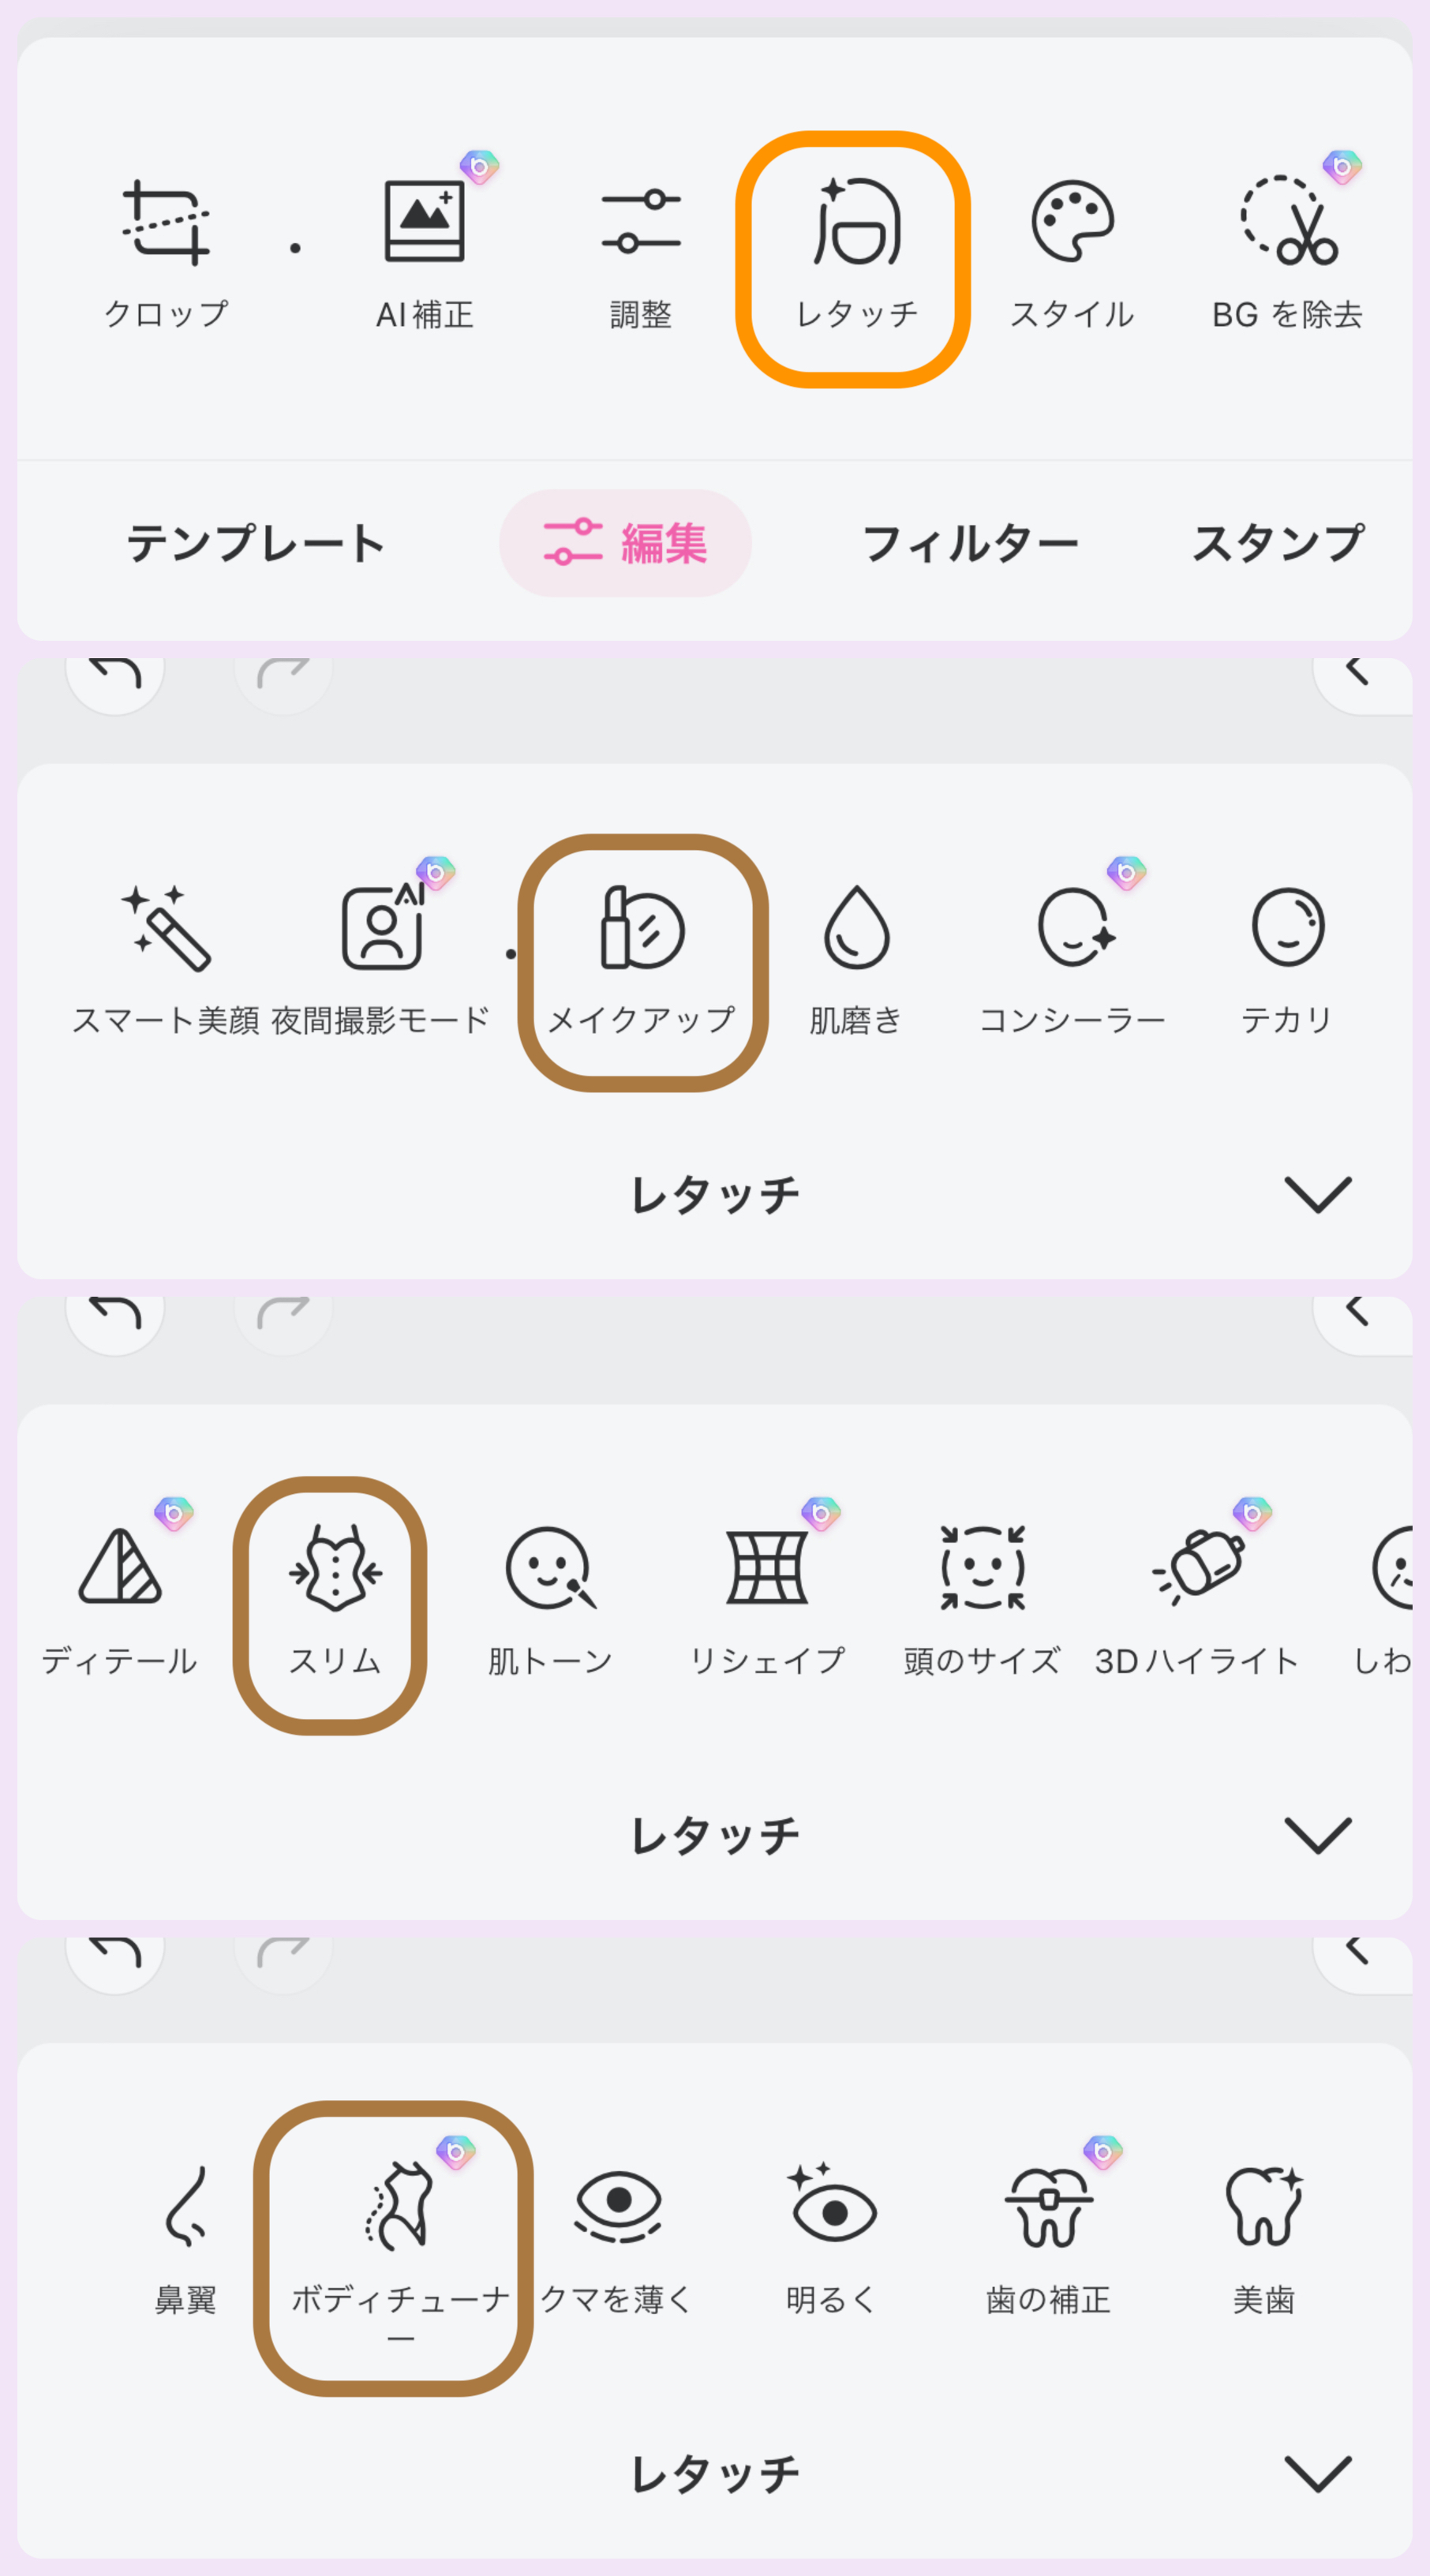 retouch_features_jp.jpg